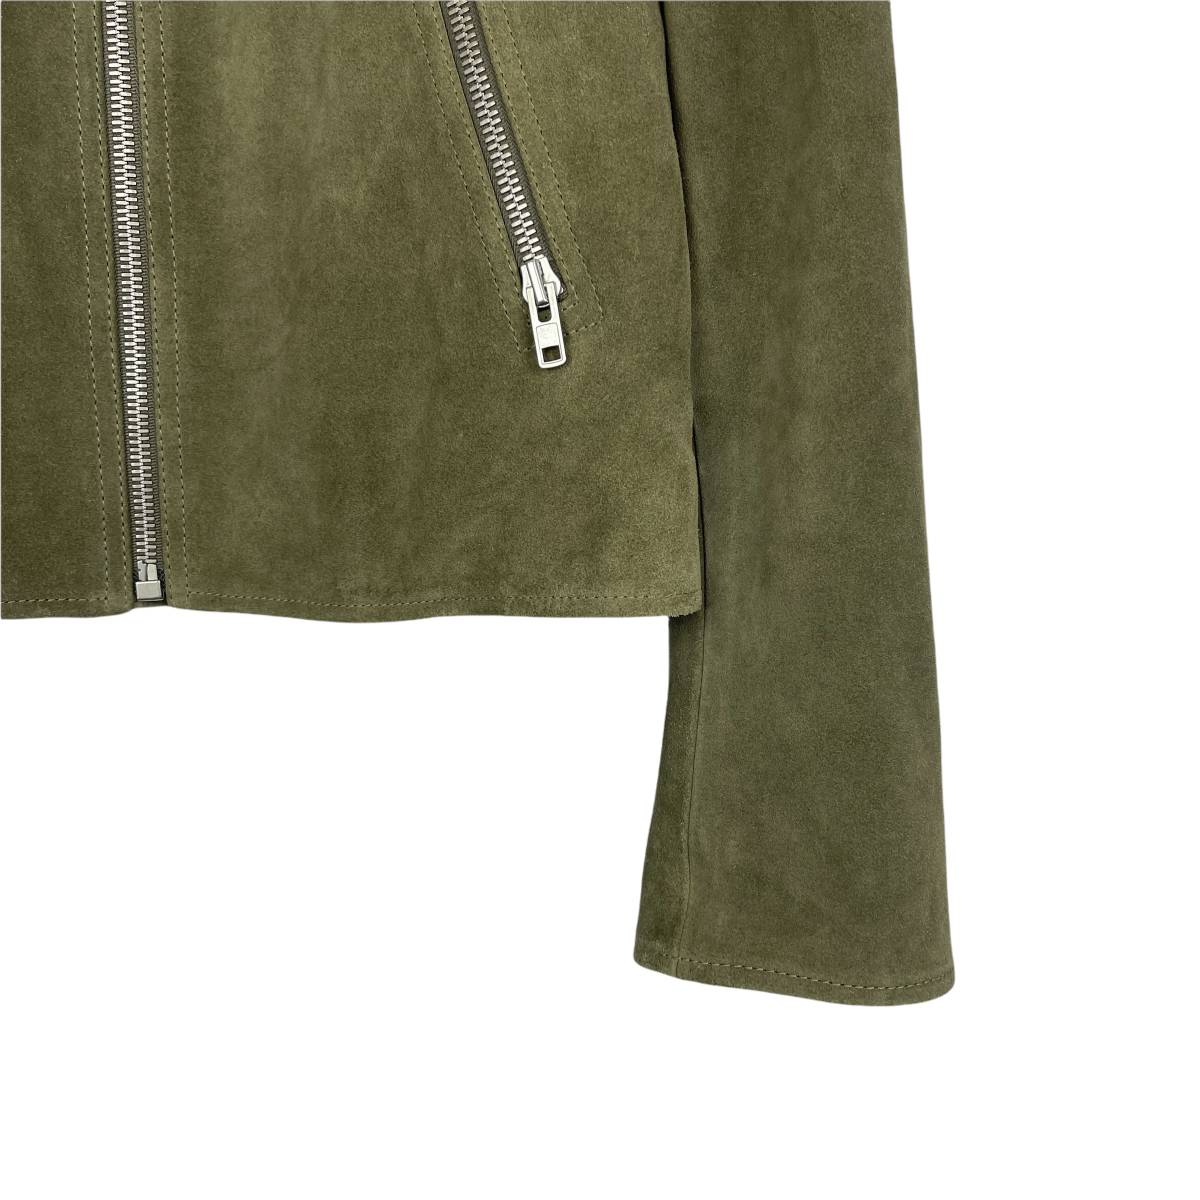 Maison Margiela(メゾン マルジェラ) 八の字 sude leather jacket (khaki)_画像3